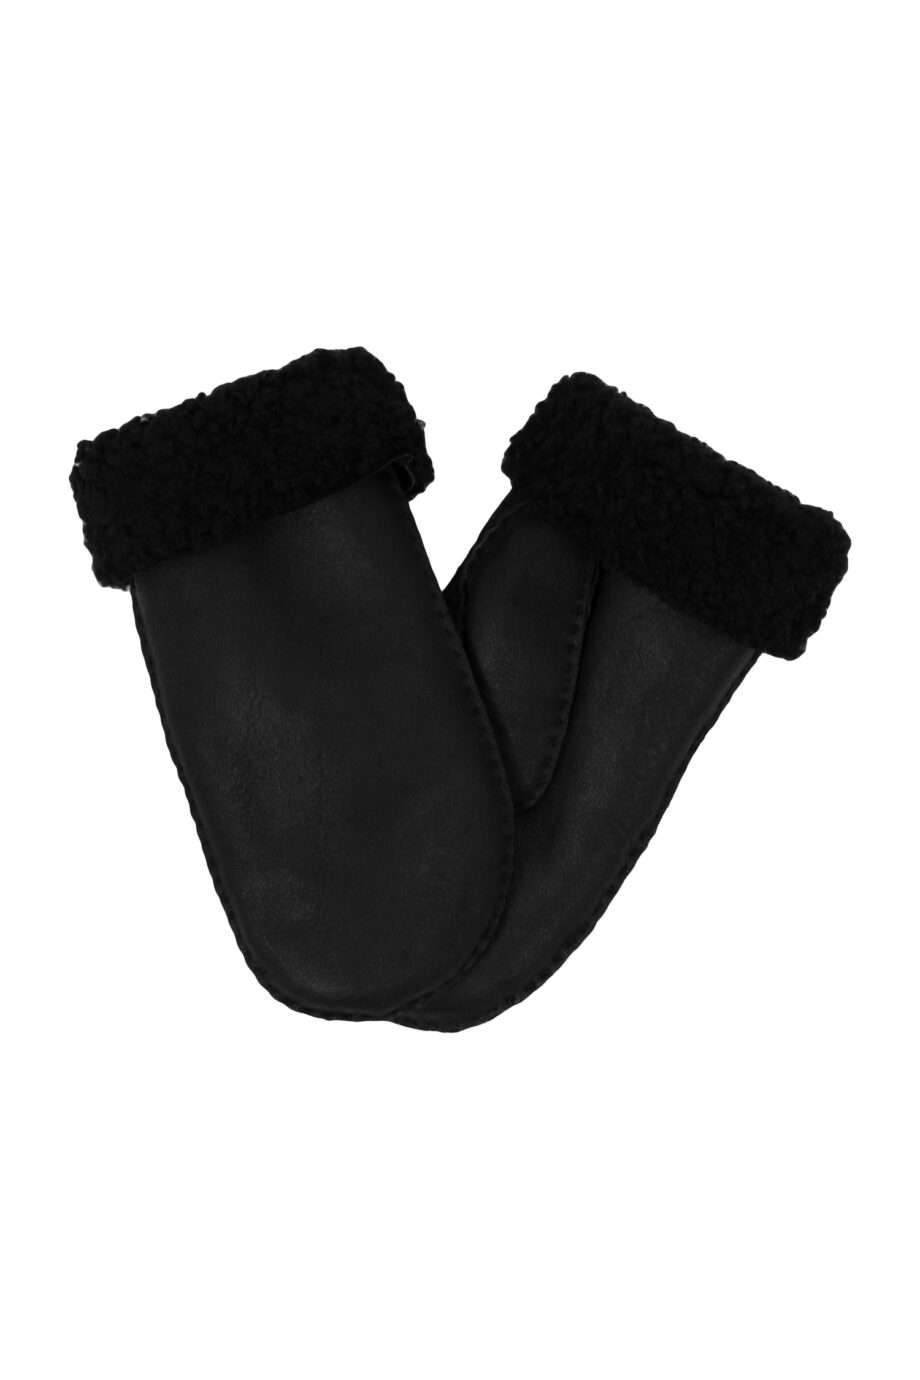 urban black nappa sheepfur mittens (men) xlarge